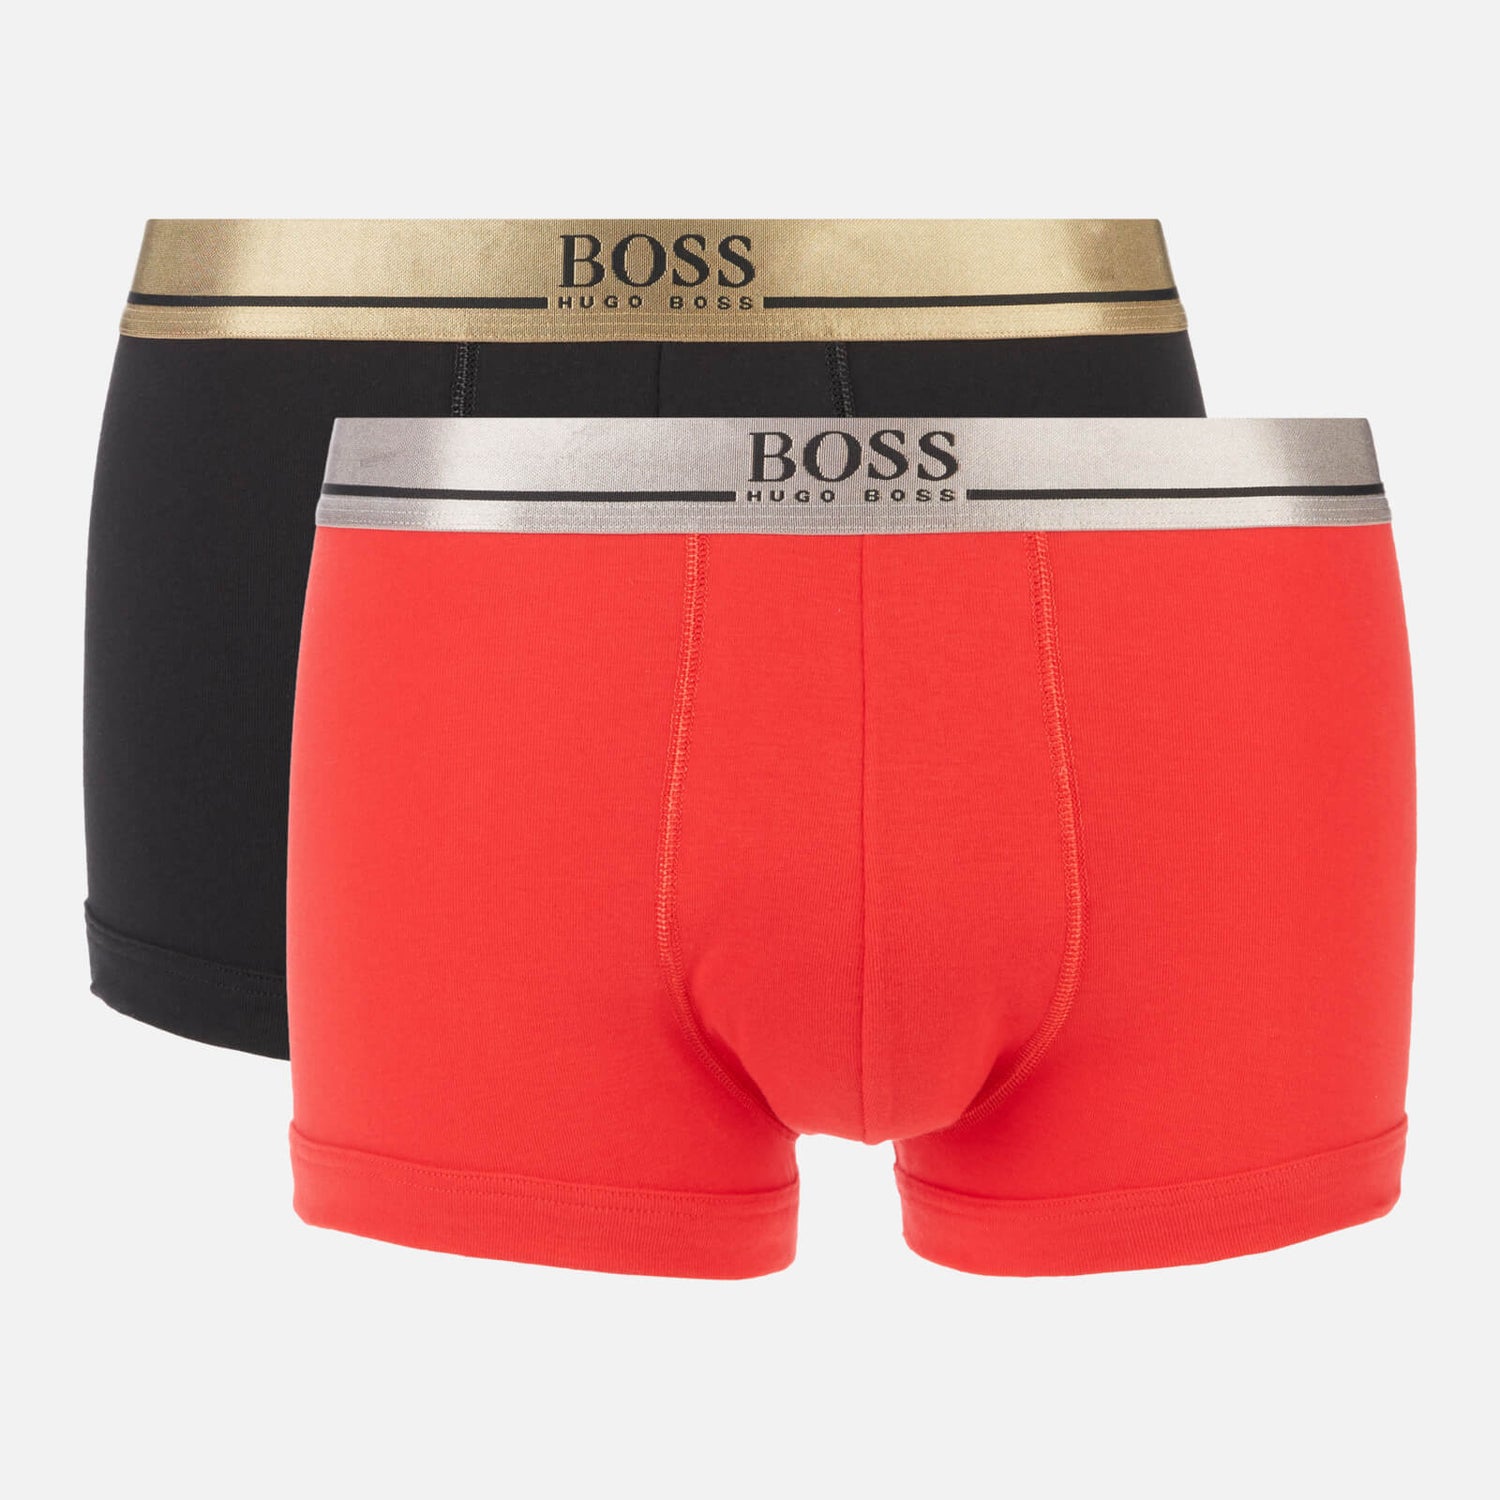 BOSS Bodywear Men's 2-Pack Gift Set Trunks - Open Red | TheHut.com